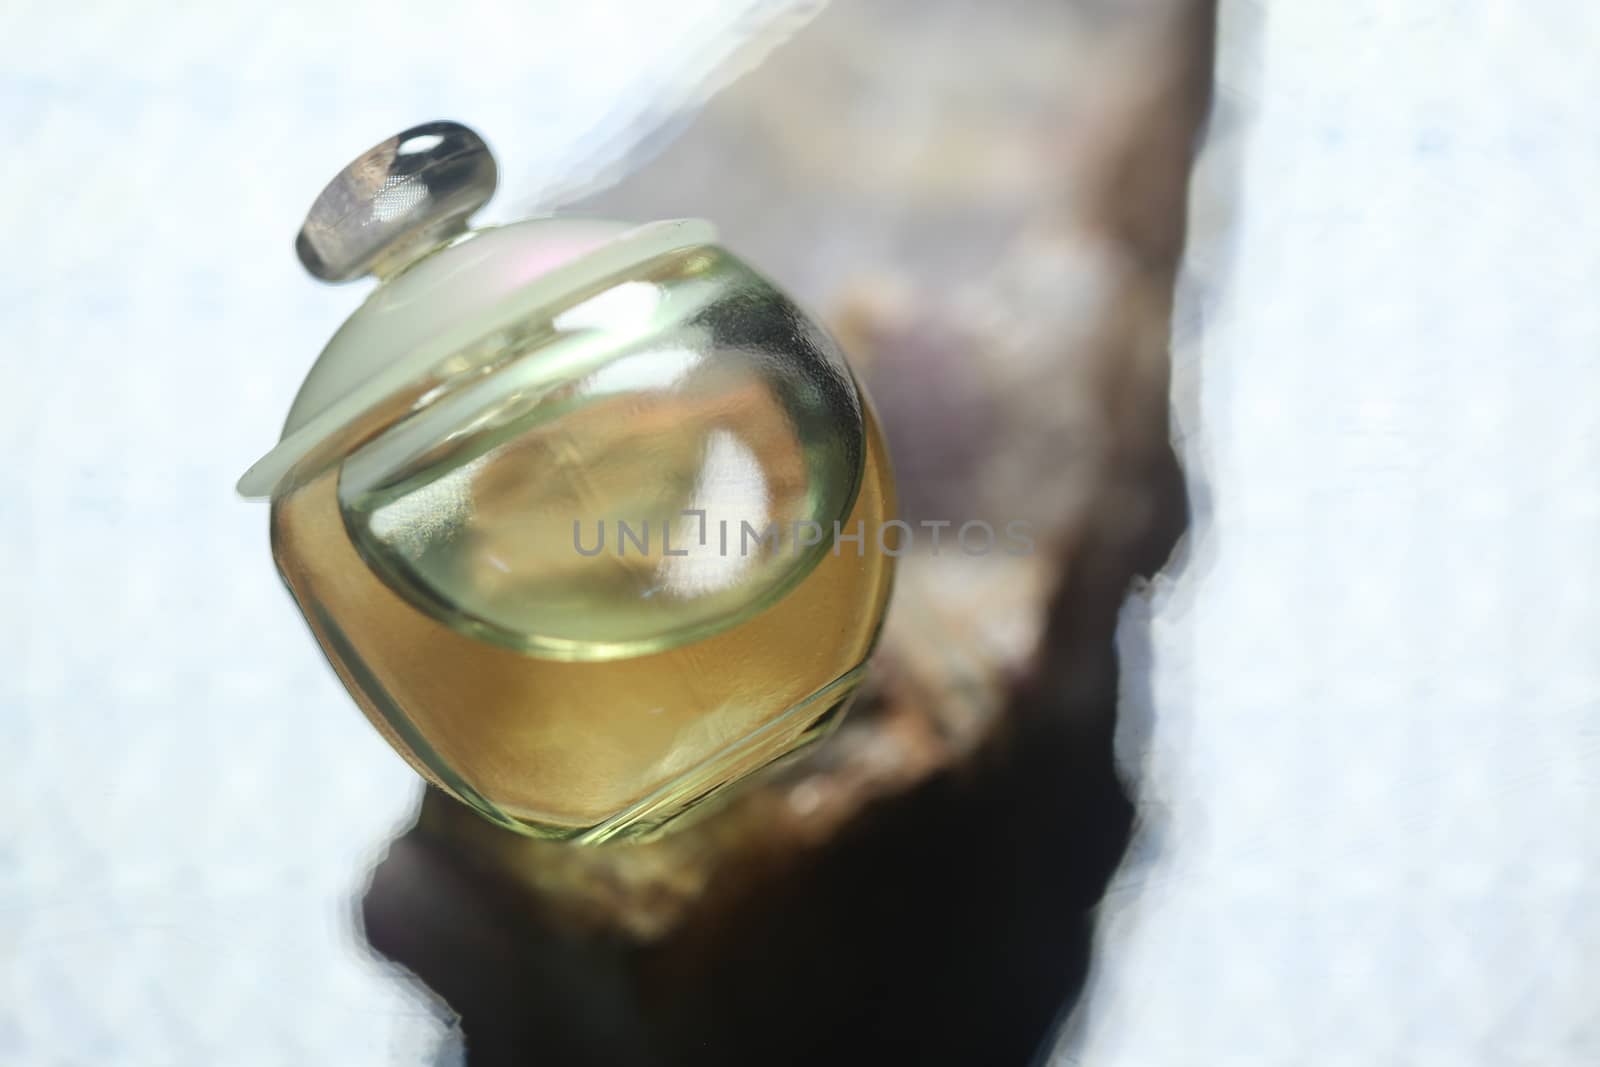 Perfume bottle with golden cap by rajastills